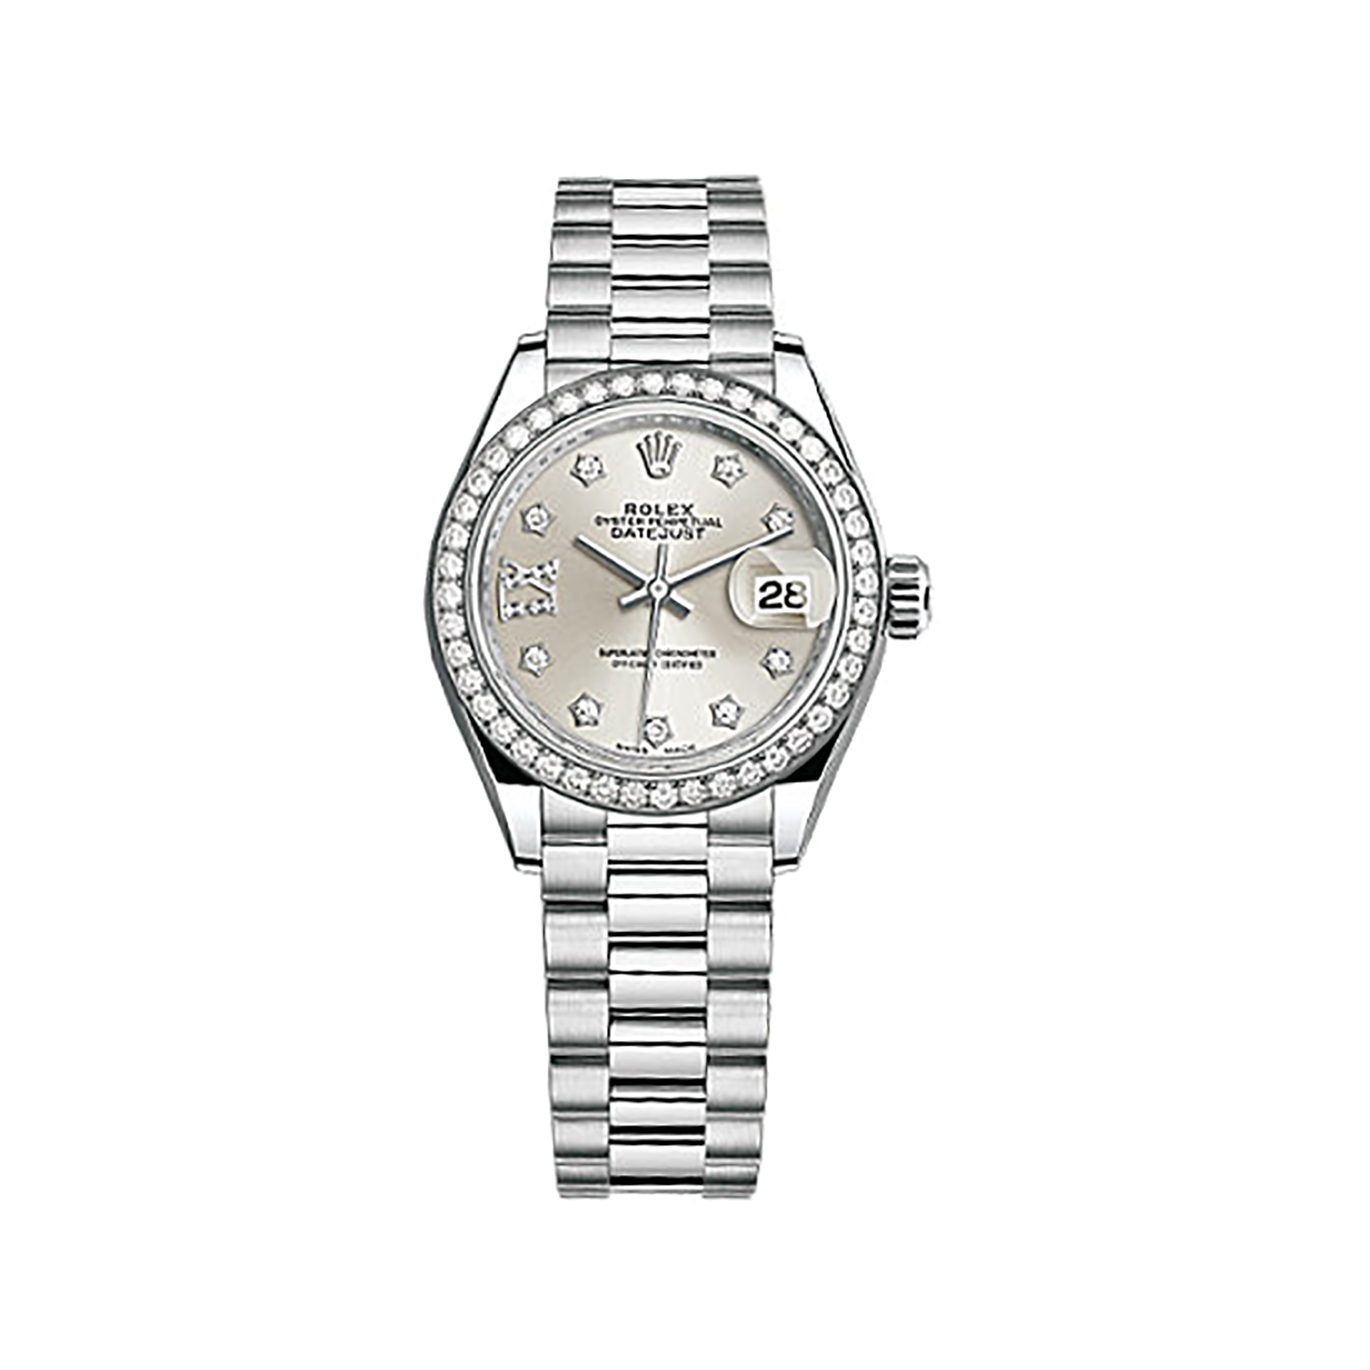 Lady-Datejust 28 279136RBR Platinum & Diamonds Watch (Silver Set with Diamonds)